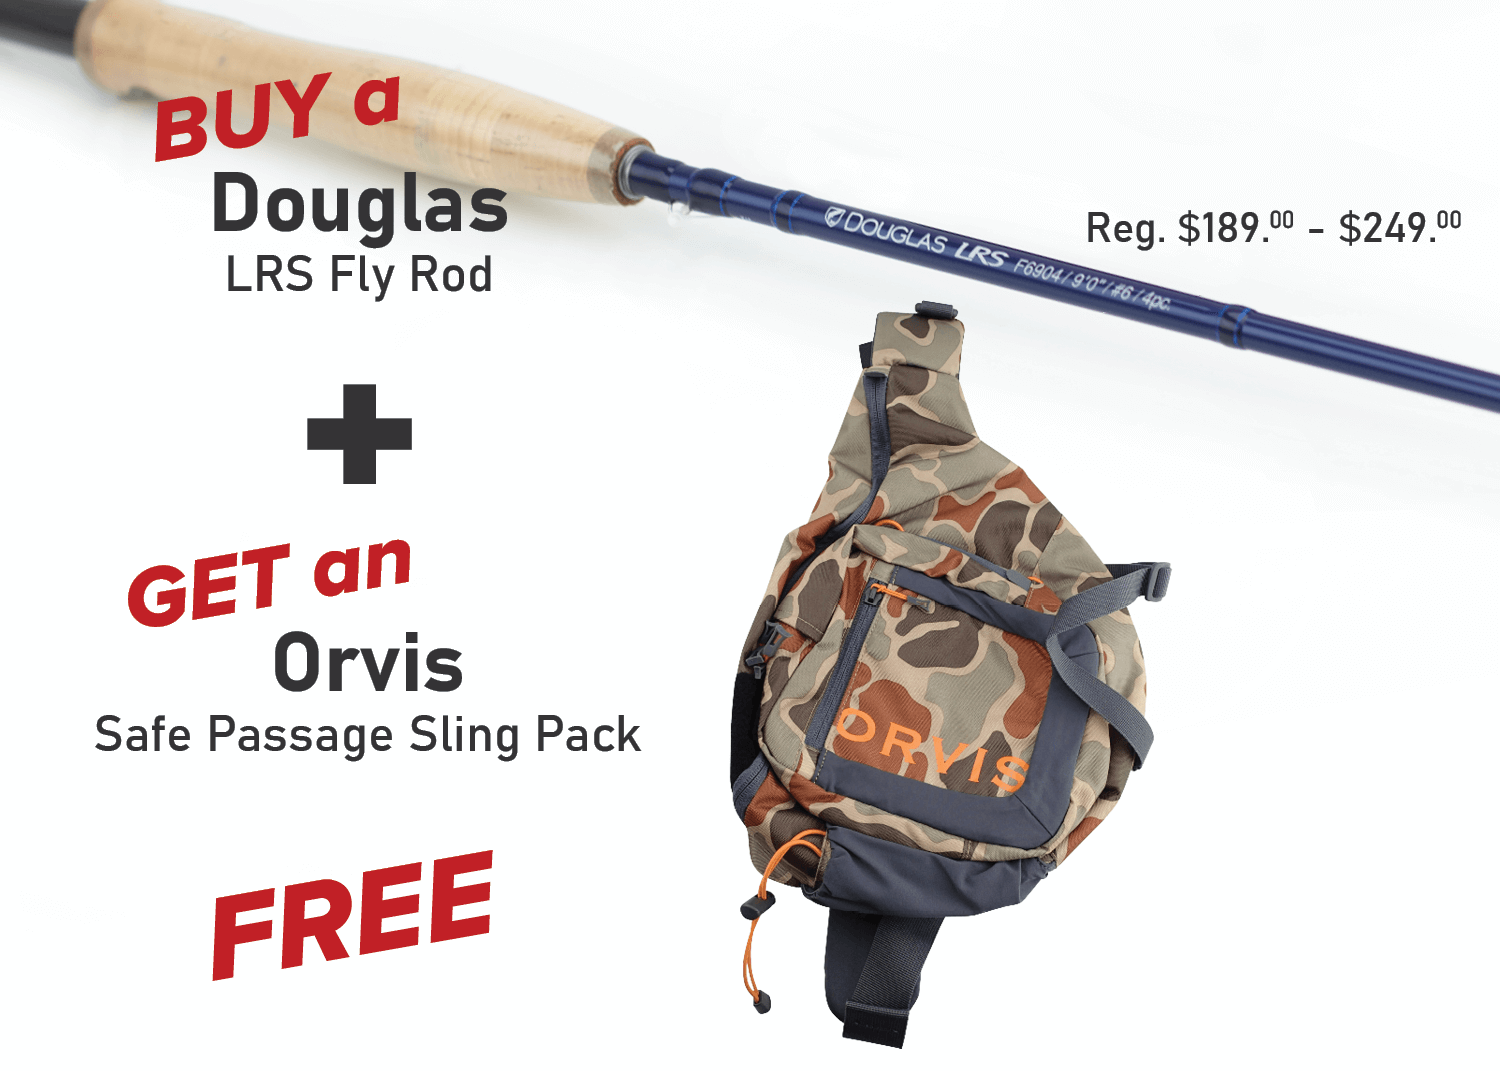 Buy a Douglas LRS Fly Rod & Get a FREE Orvis Safe Passage Sling Pack